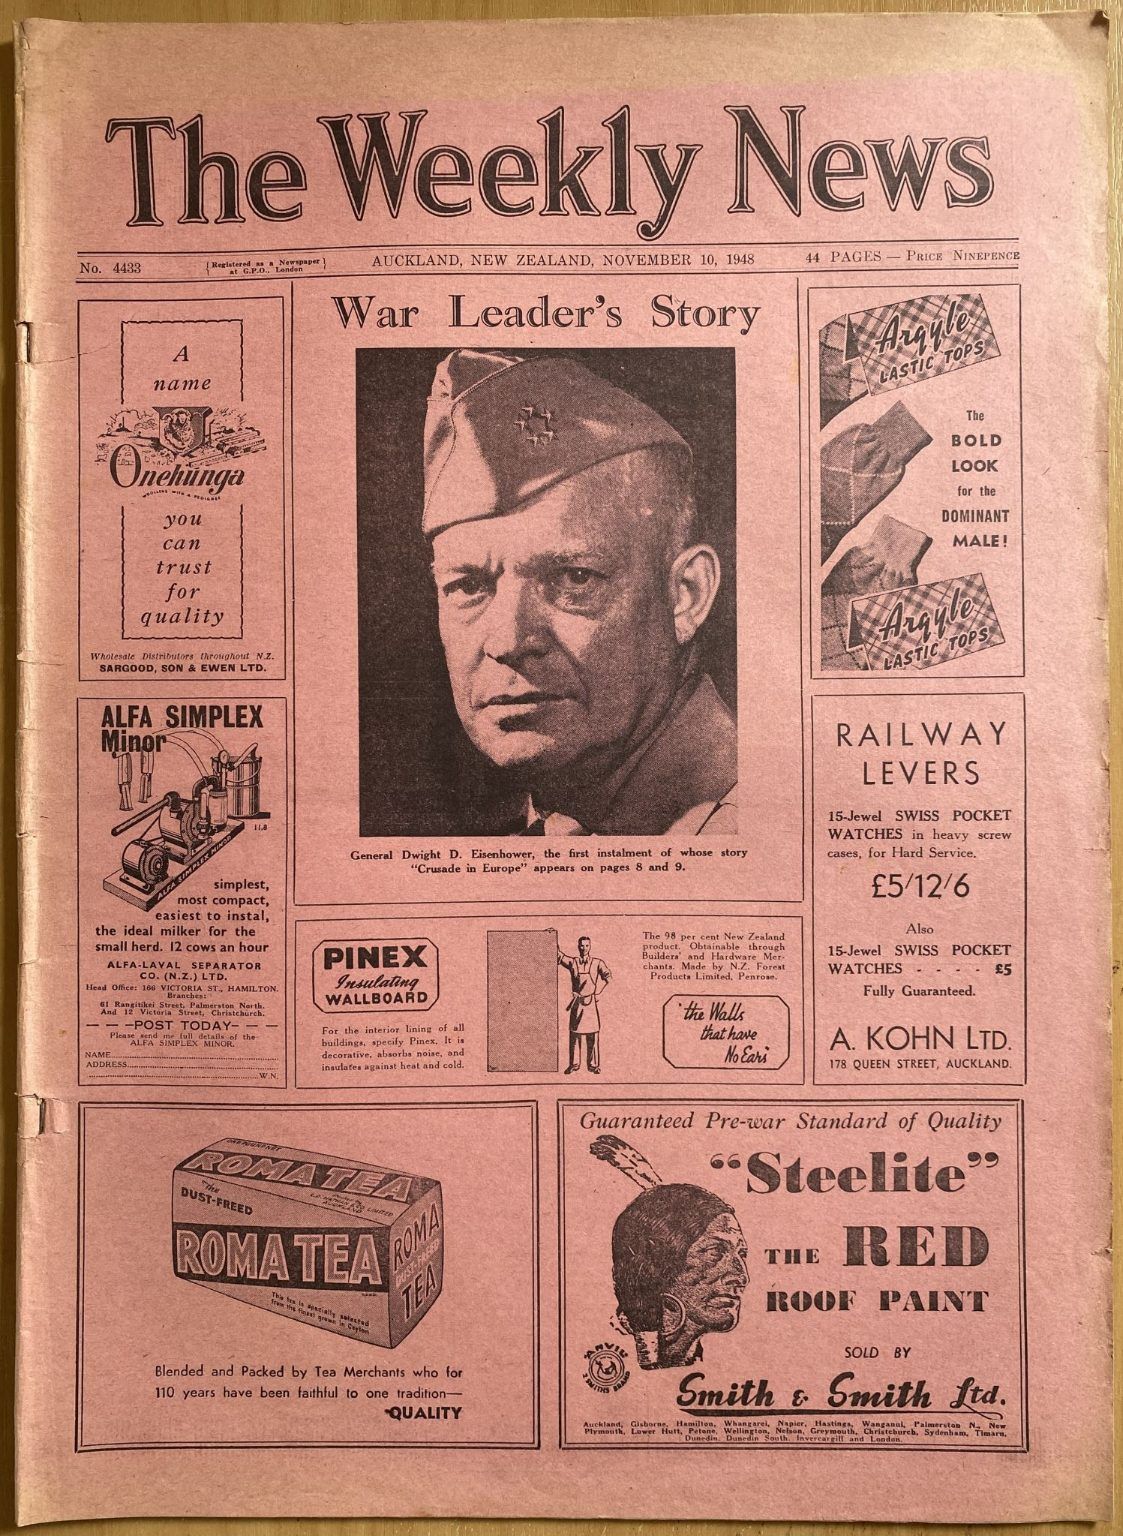 OLD NEWSPAPER: The Weekly News - No. 4433, 10 November 1948